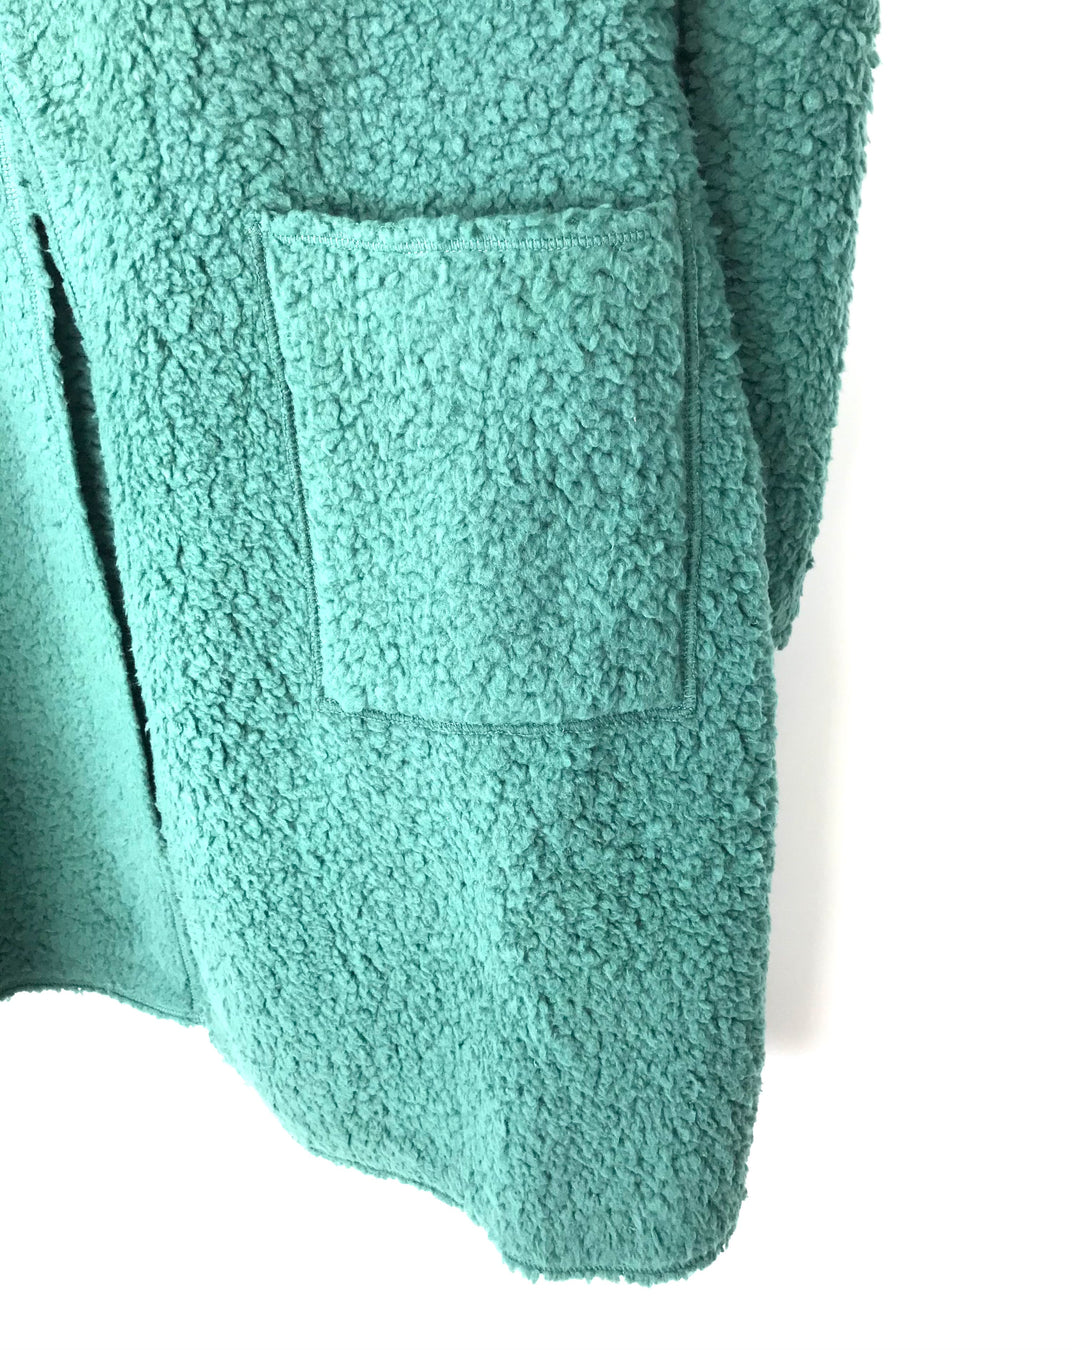 Green Sherpa Open Cardigan - Size 4/6